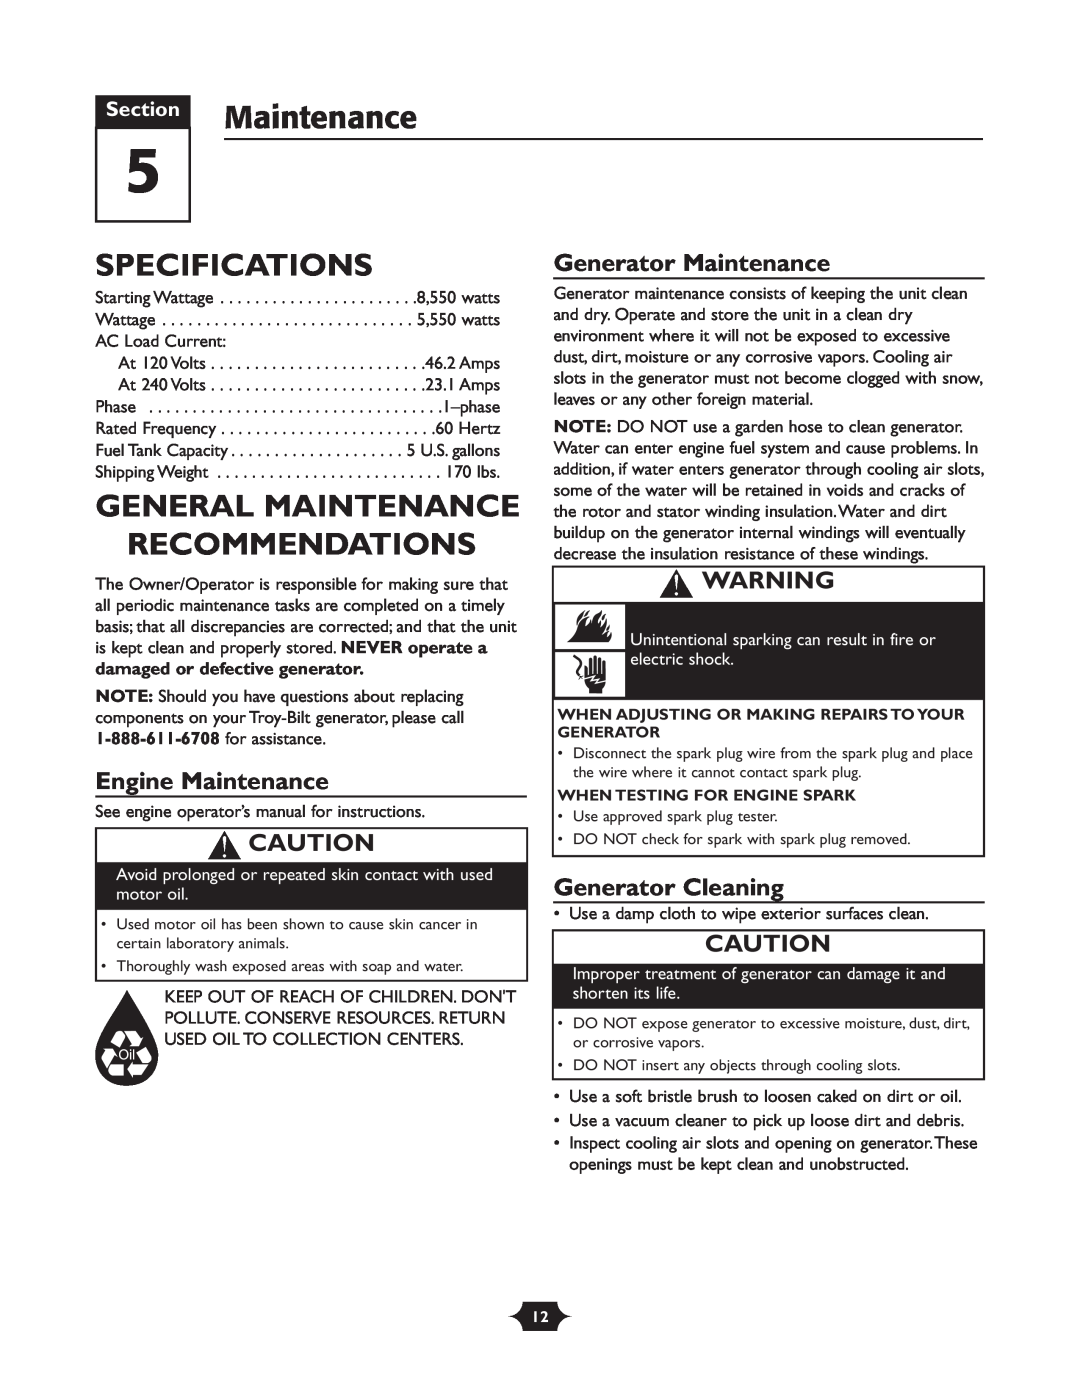 Troy-Bilt 030245 manual Specifications, General Maintenance Recommendations, Engine Maintenance, Generator Maintenance 